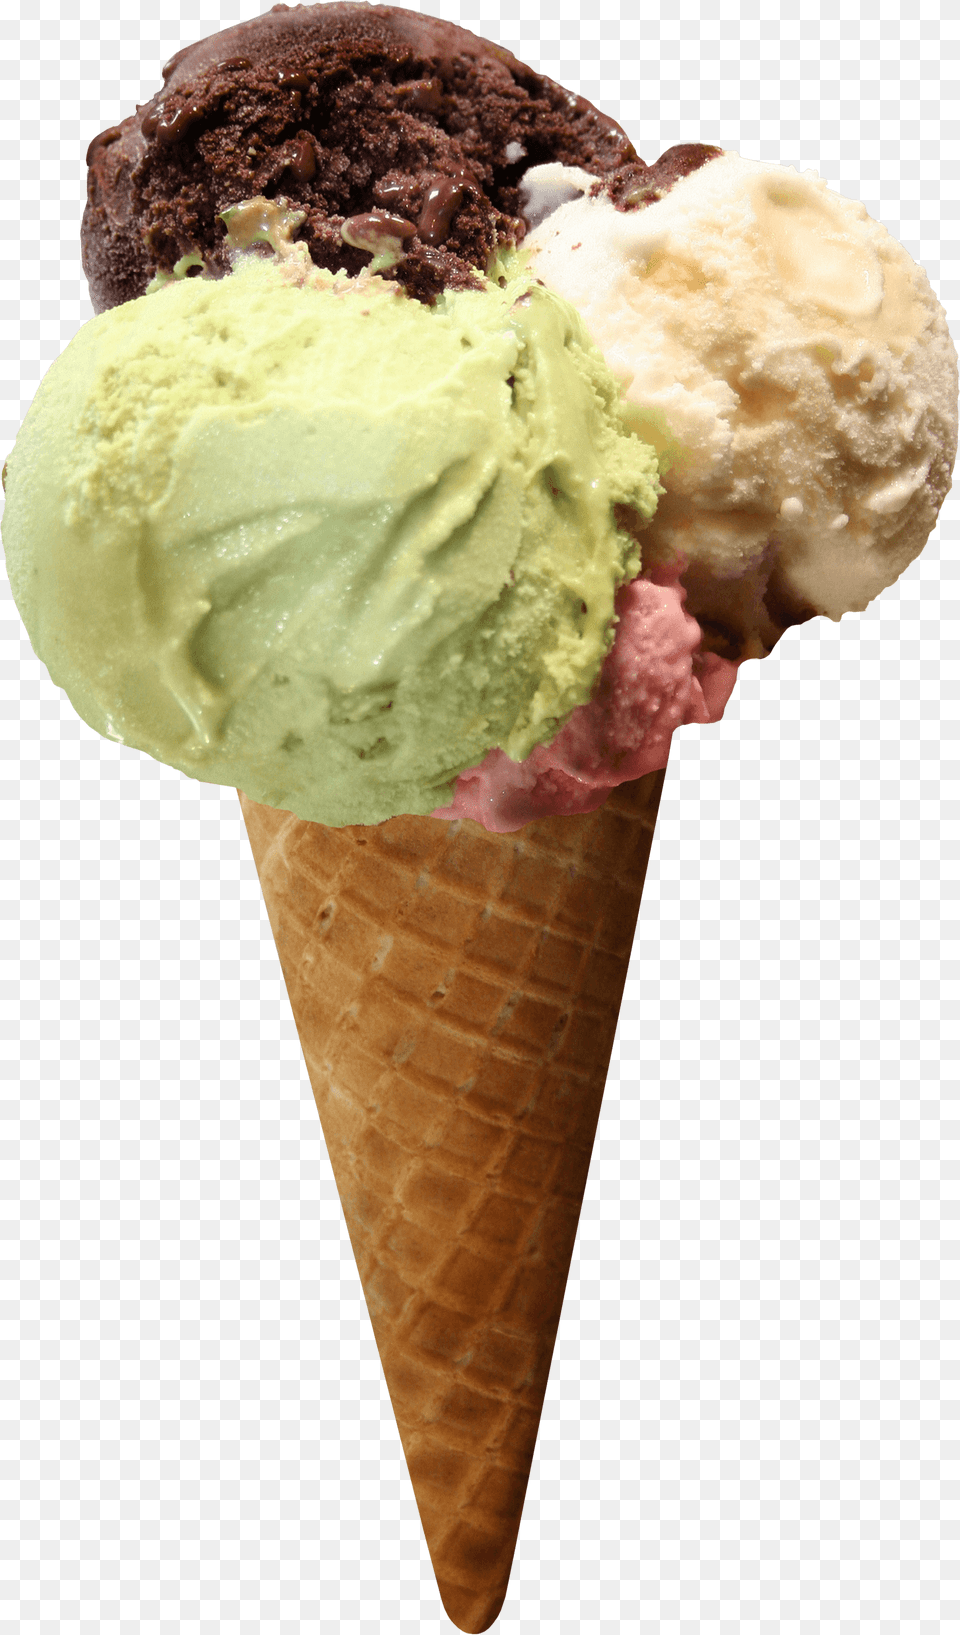 Horn Three Tastes Ice Cream, Dessert, Food, Ice Cream, Soft Serve Ice Cream Free Png Download